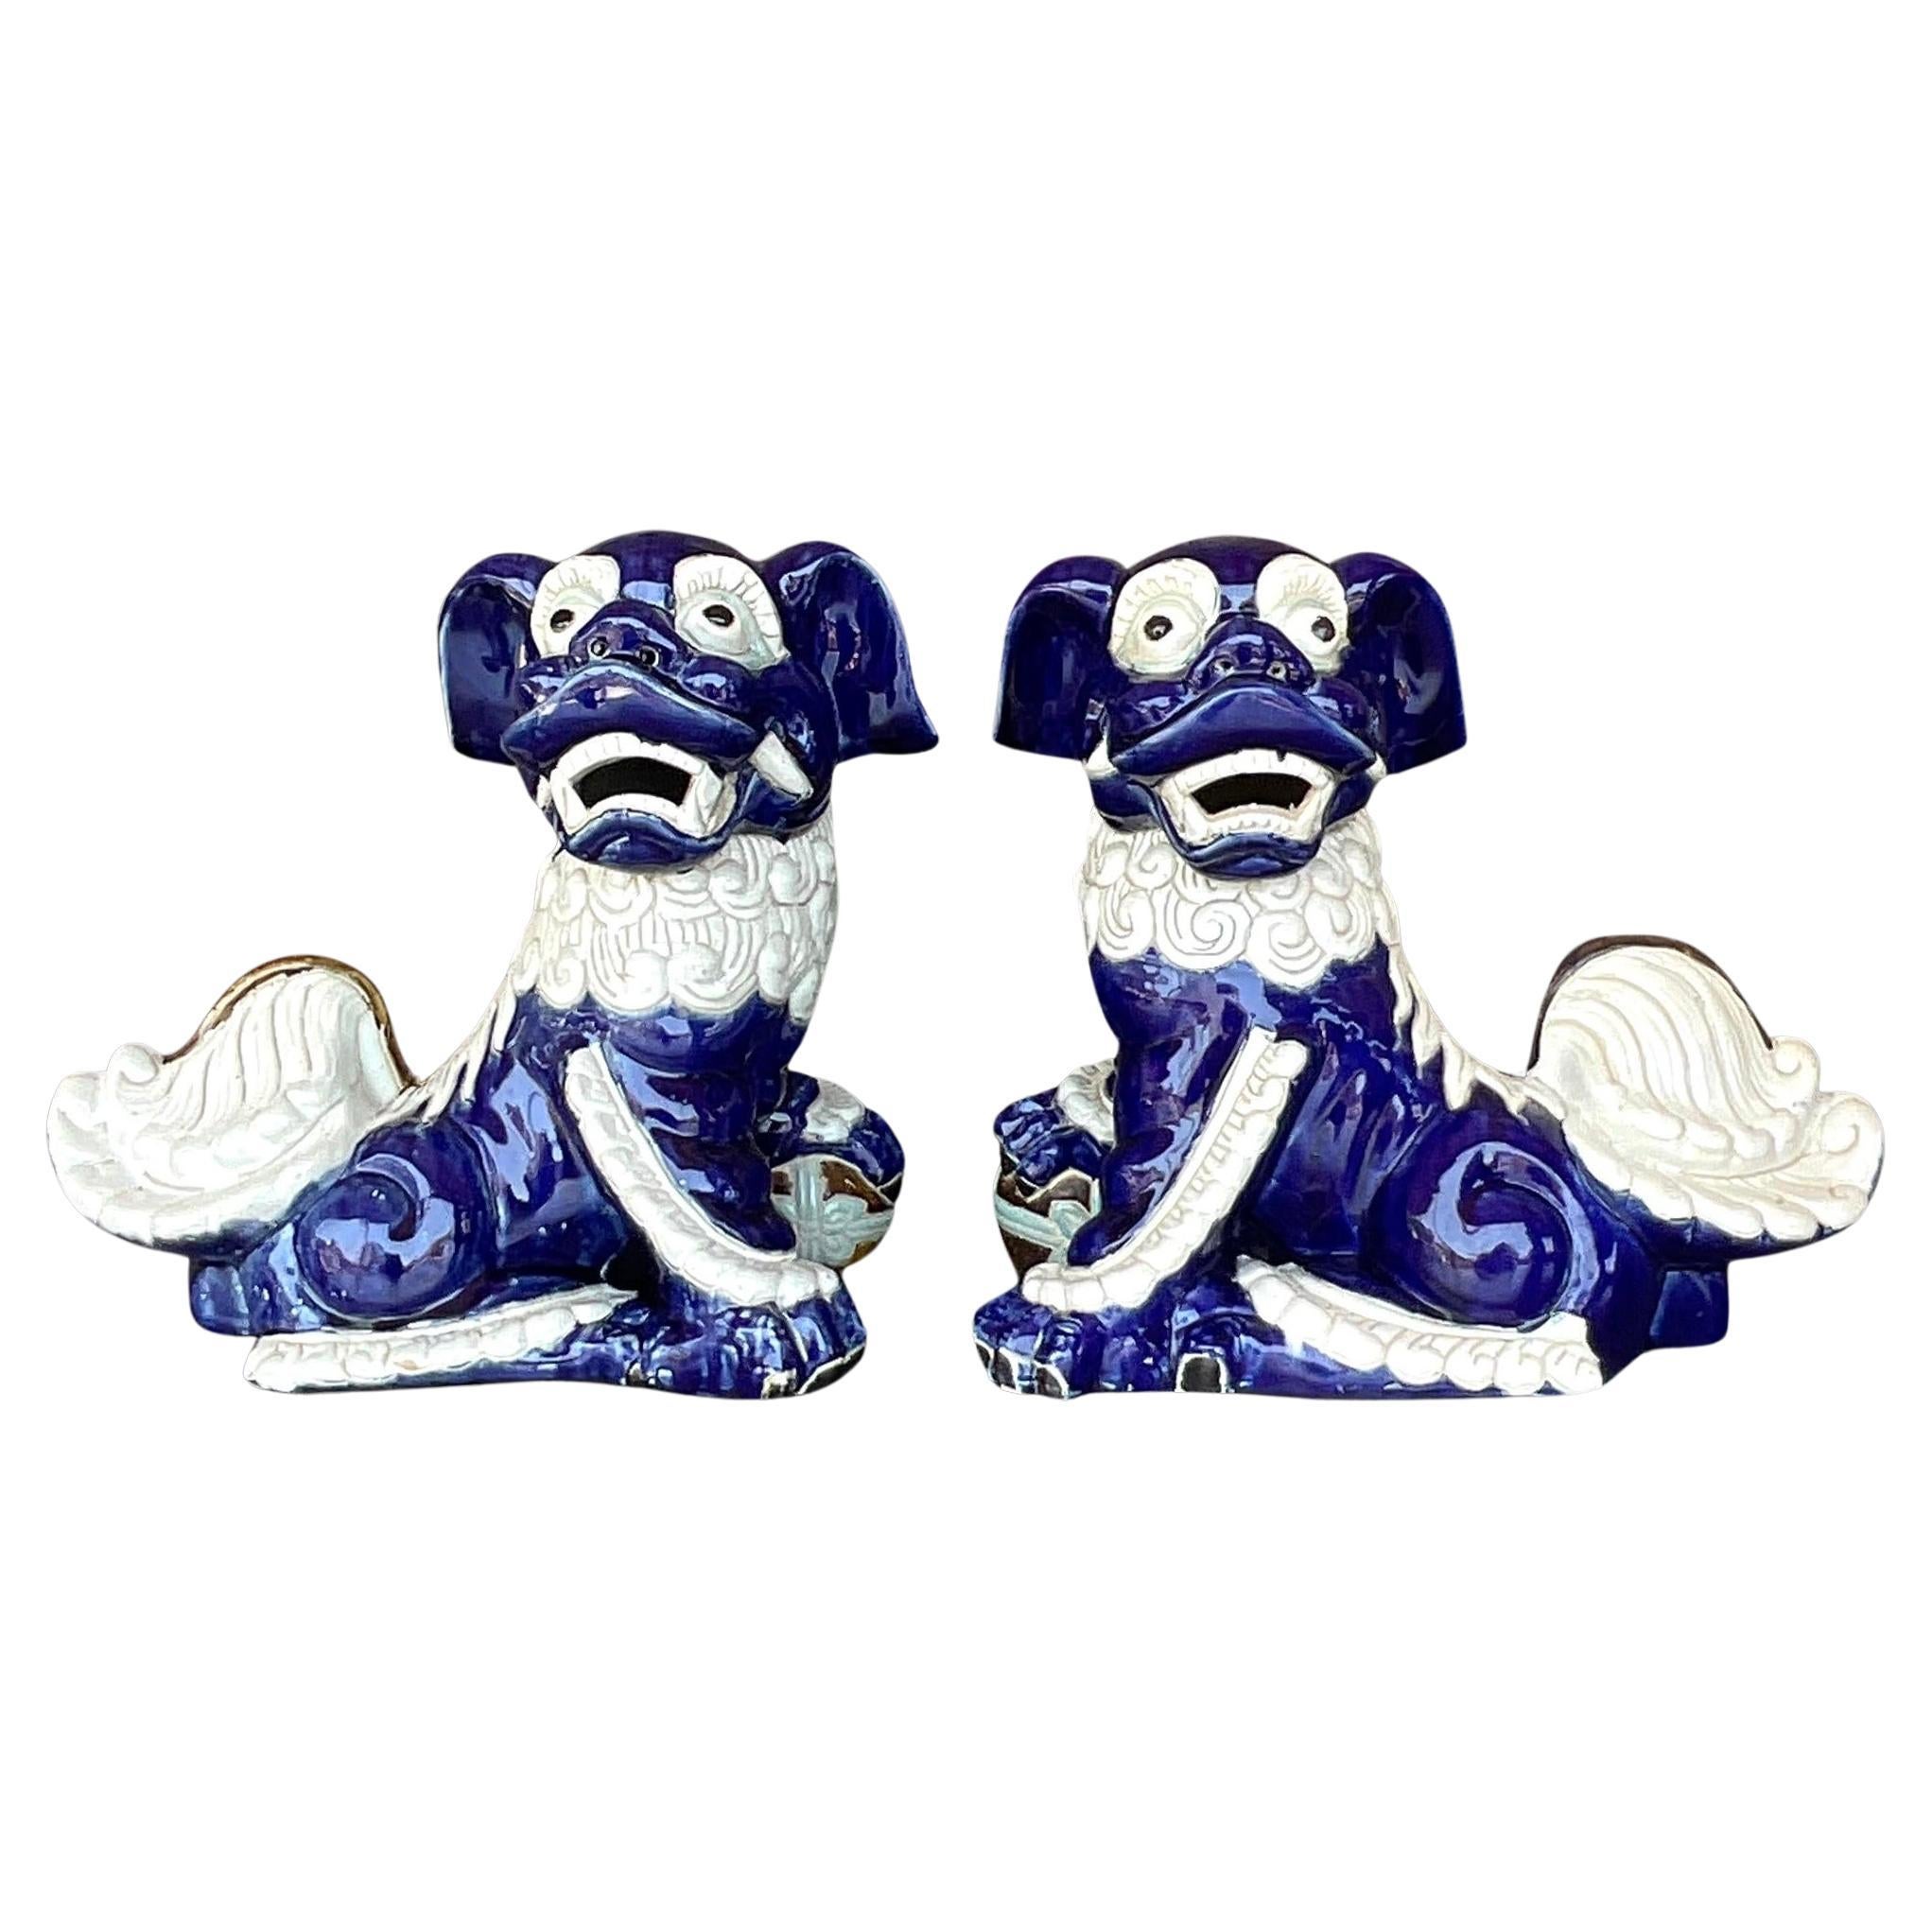 Vintage Regency Glazed Ceramic Foo Dogs - a Pair